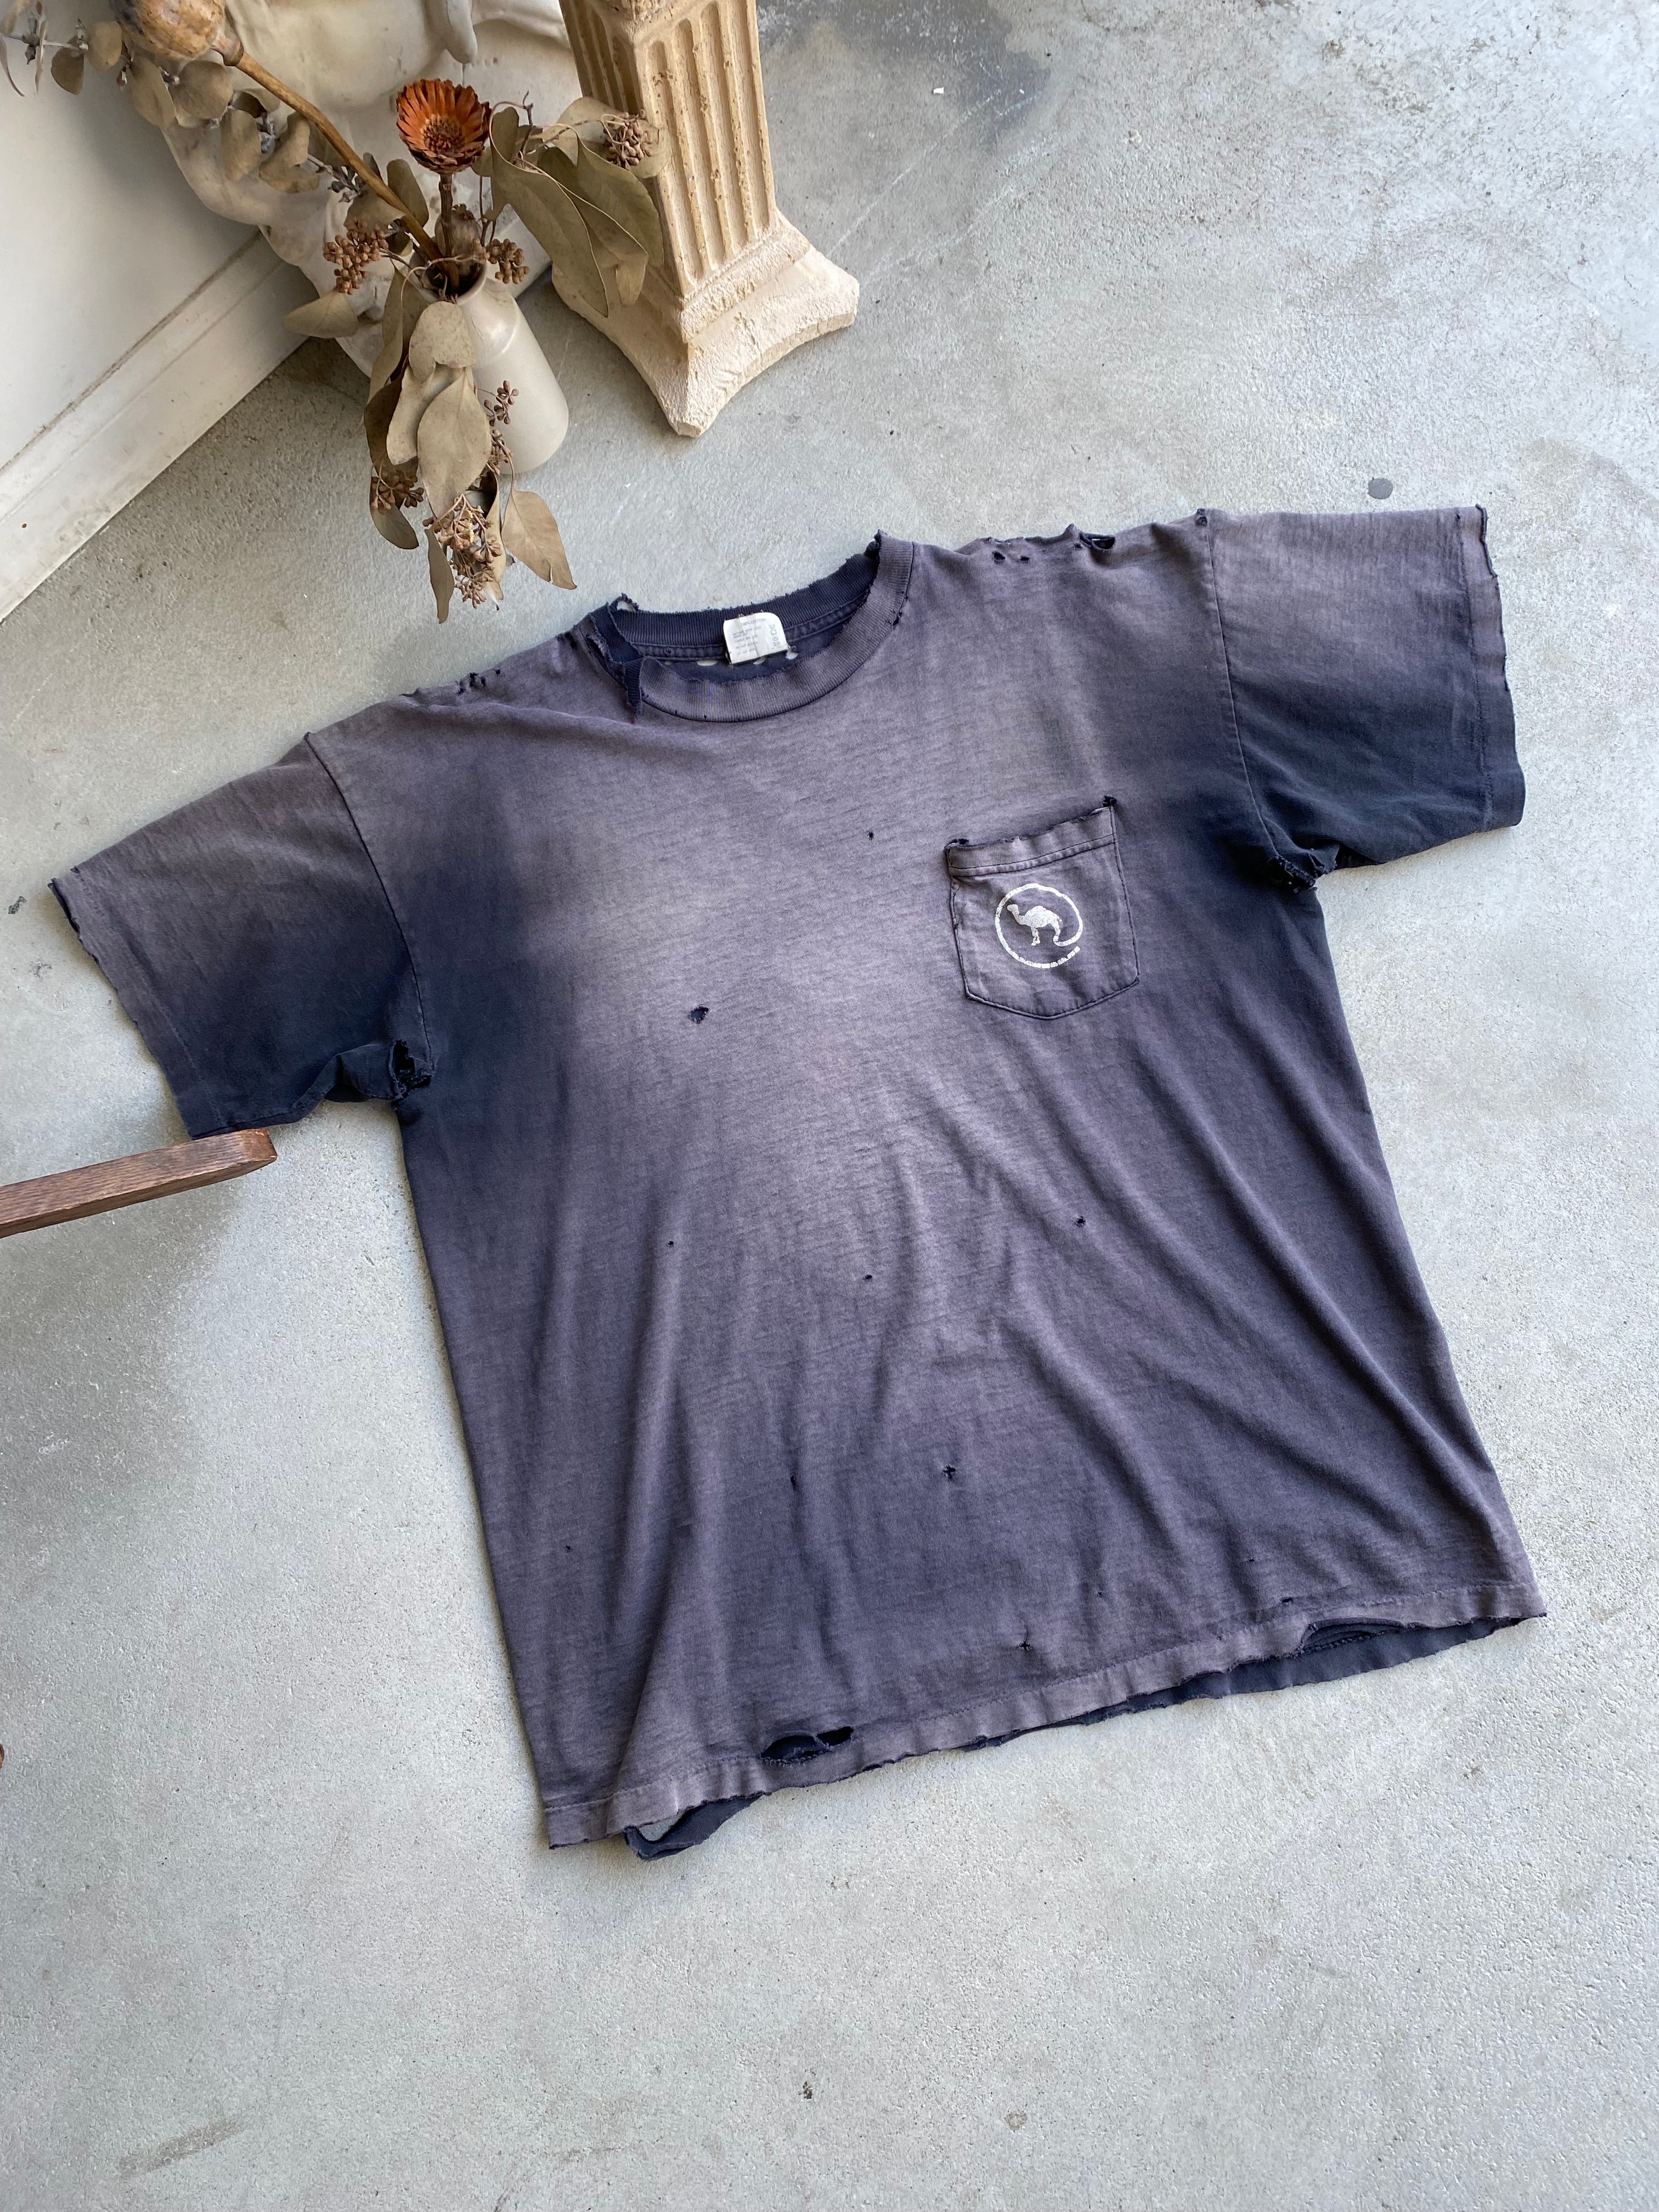 1990s Thrashed Camel T-Shirt (XXL)